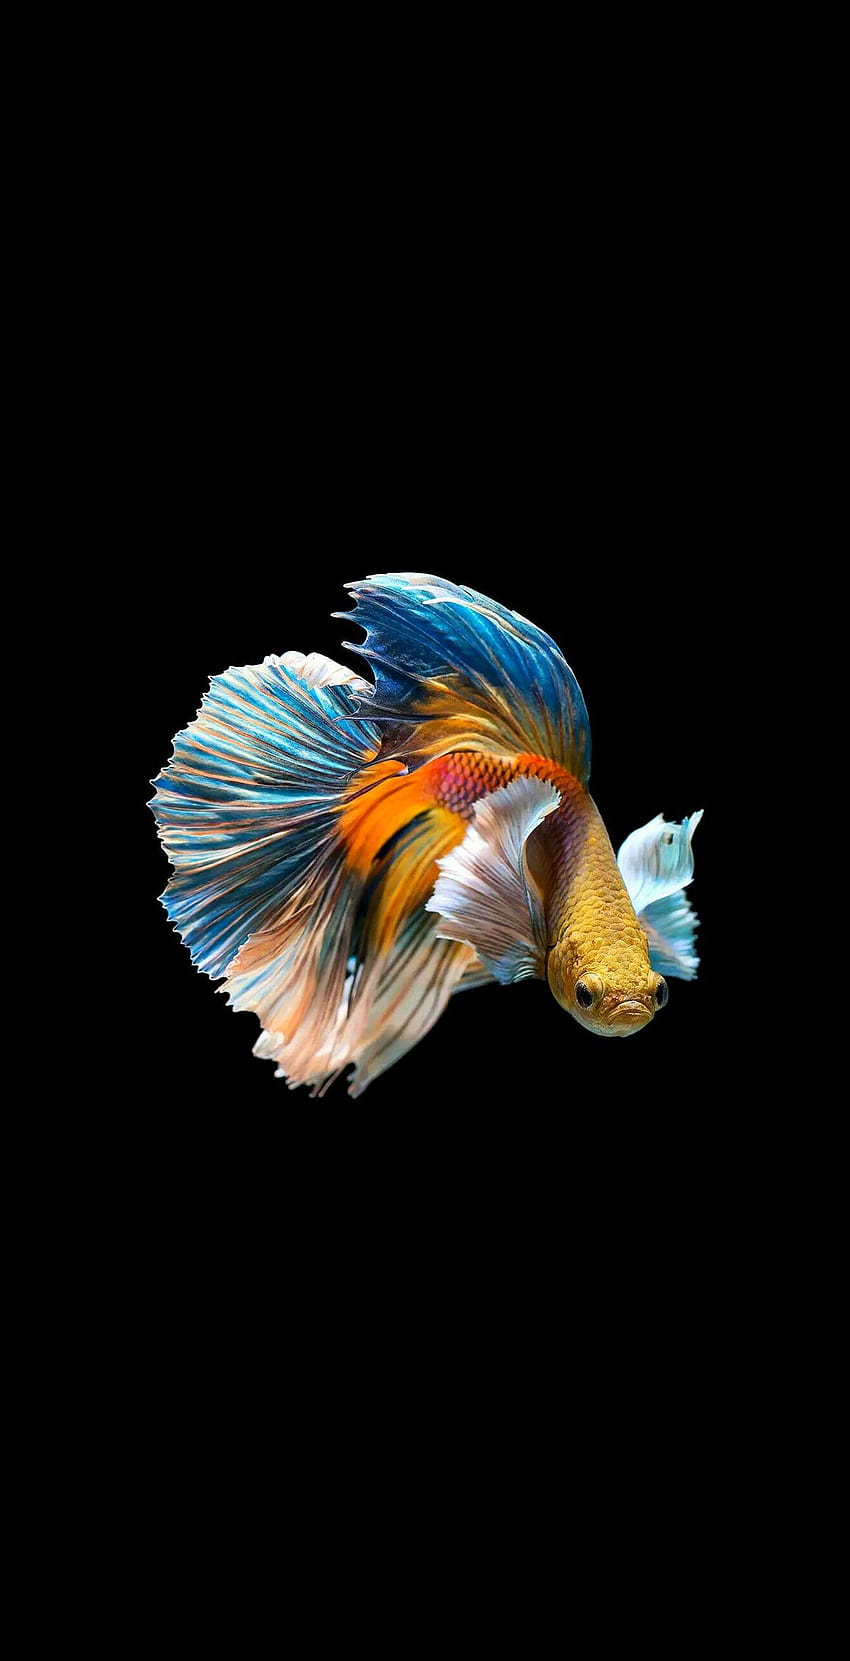 Pez Betta [1328×2595]: s Amoled, peces Amoled fondo de pantalla del teléfono